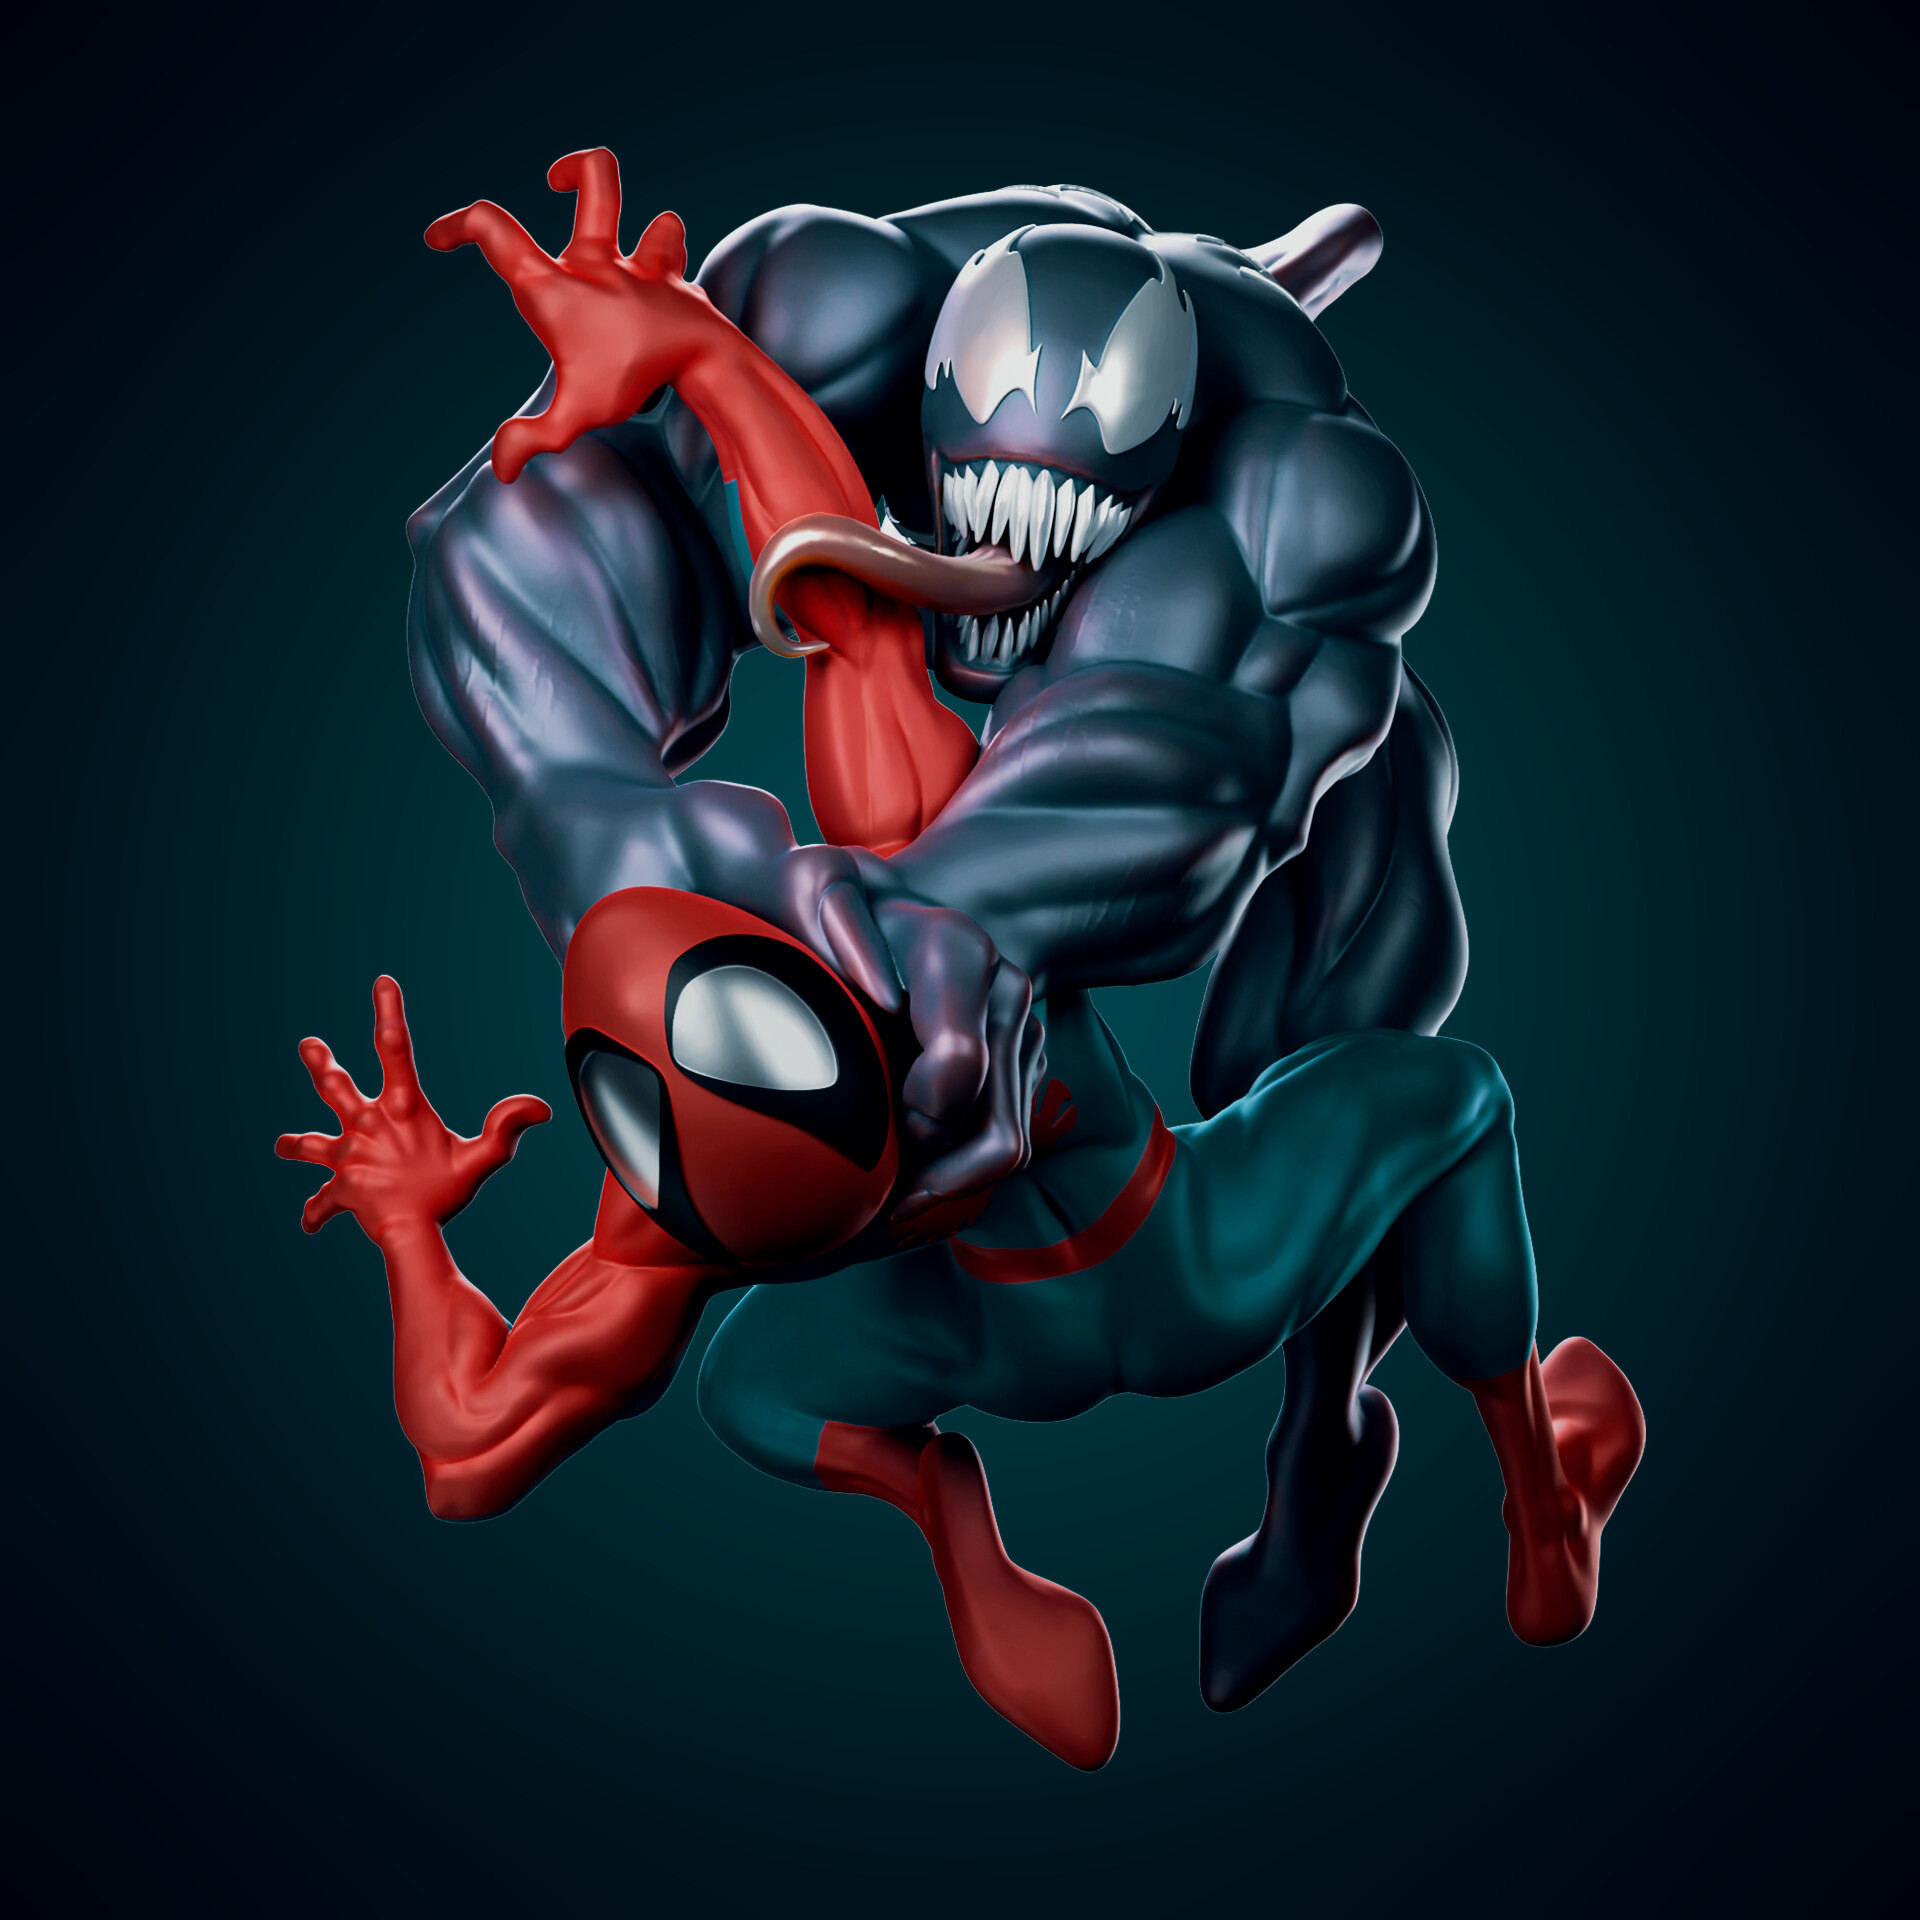 Venom Vs Spider-Man - Finished Projects - Blender Artists Community